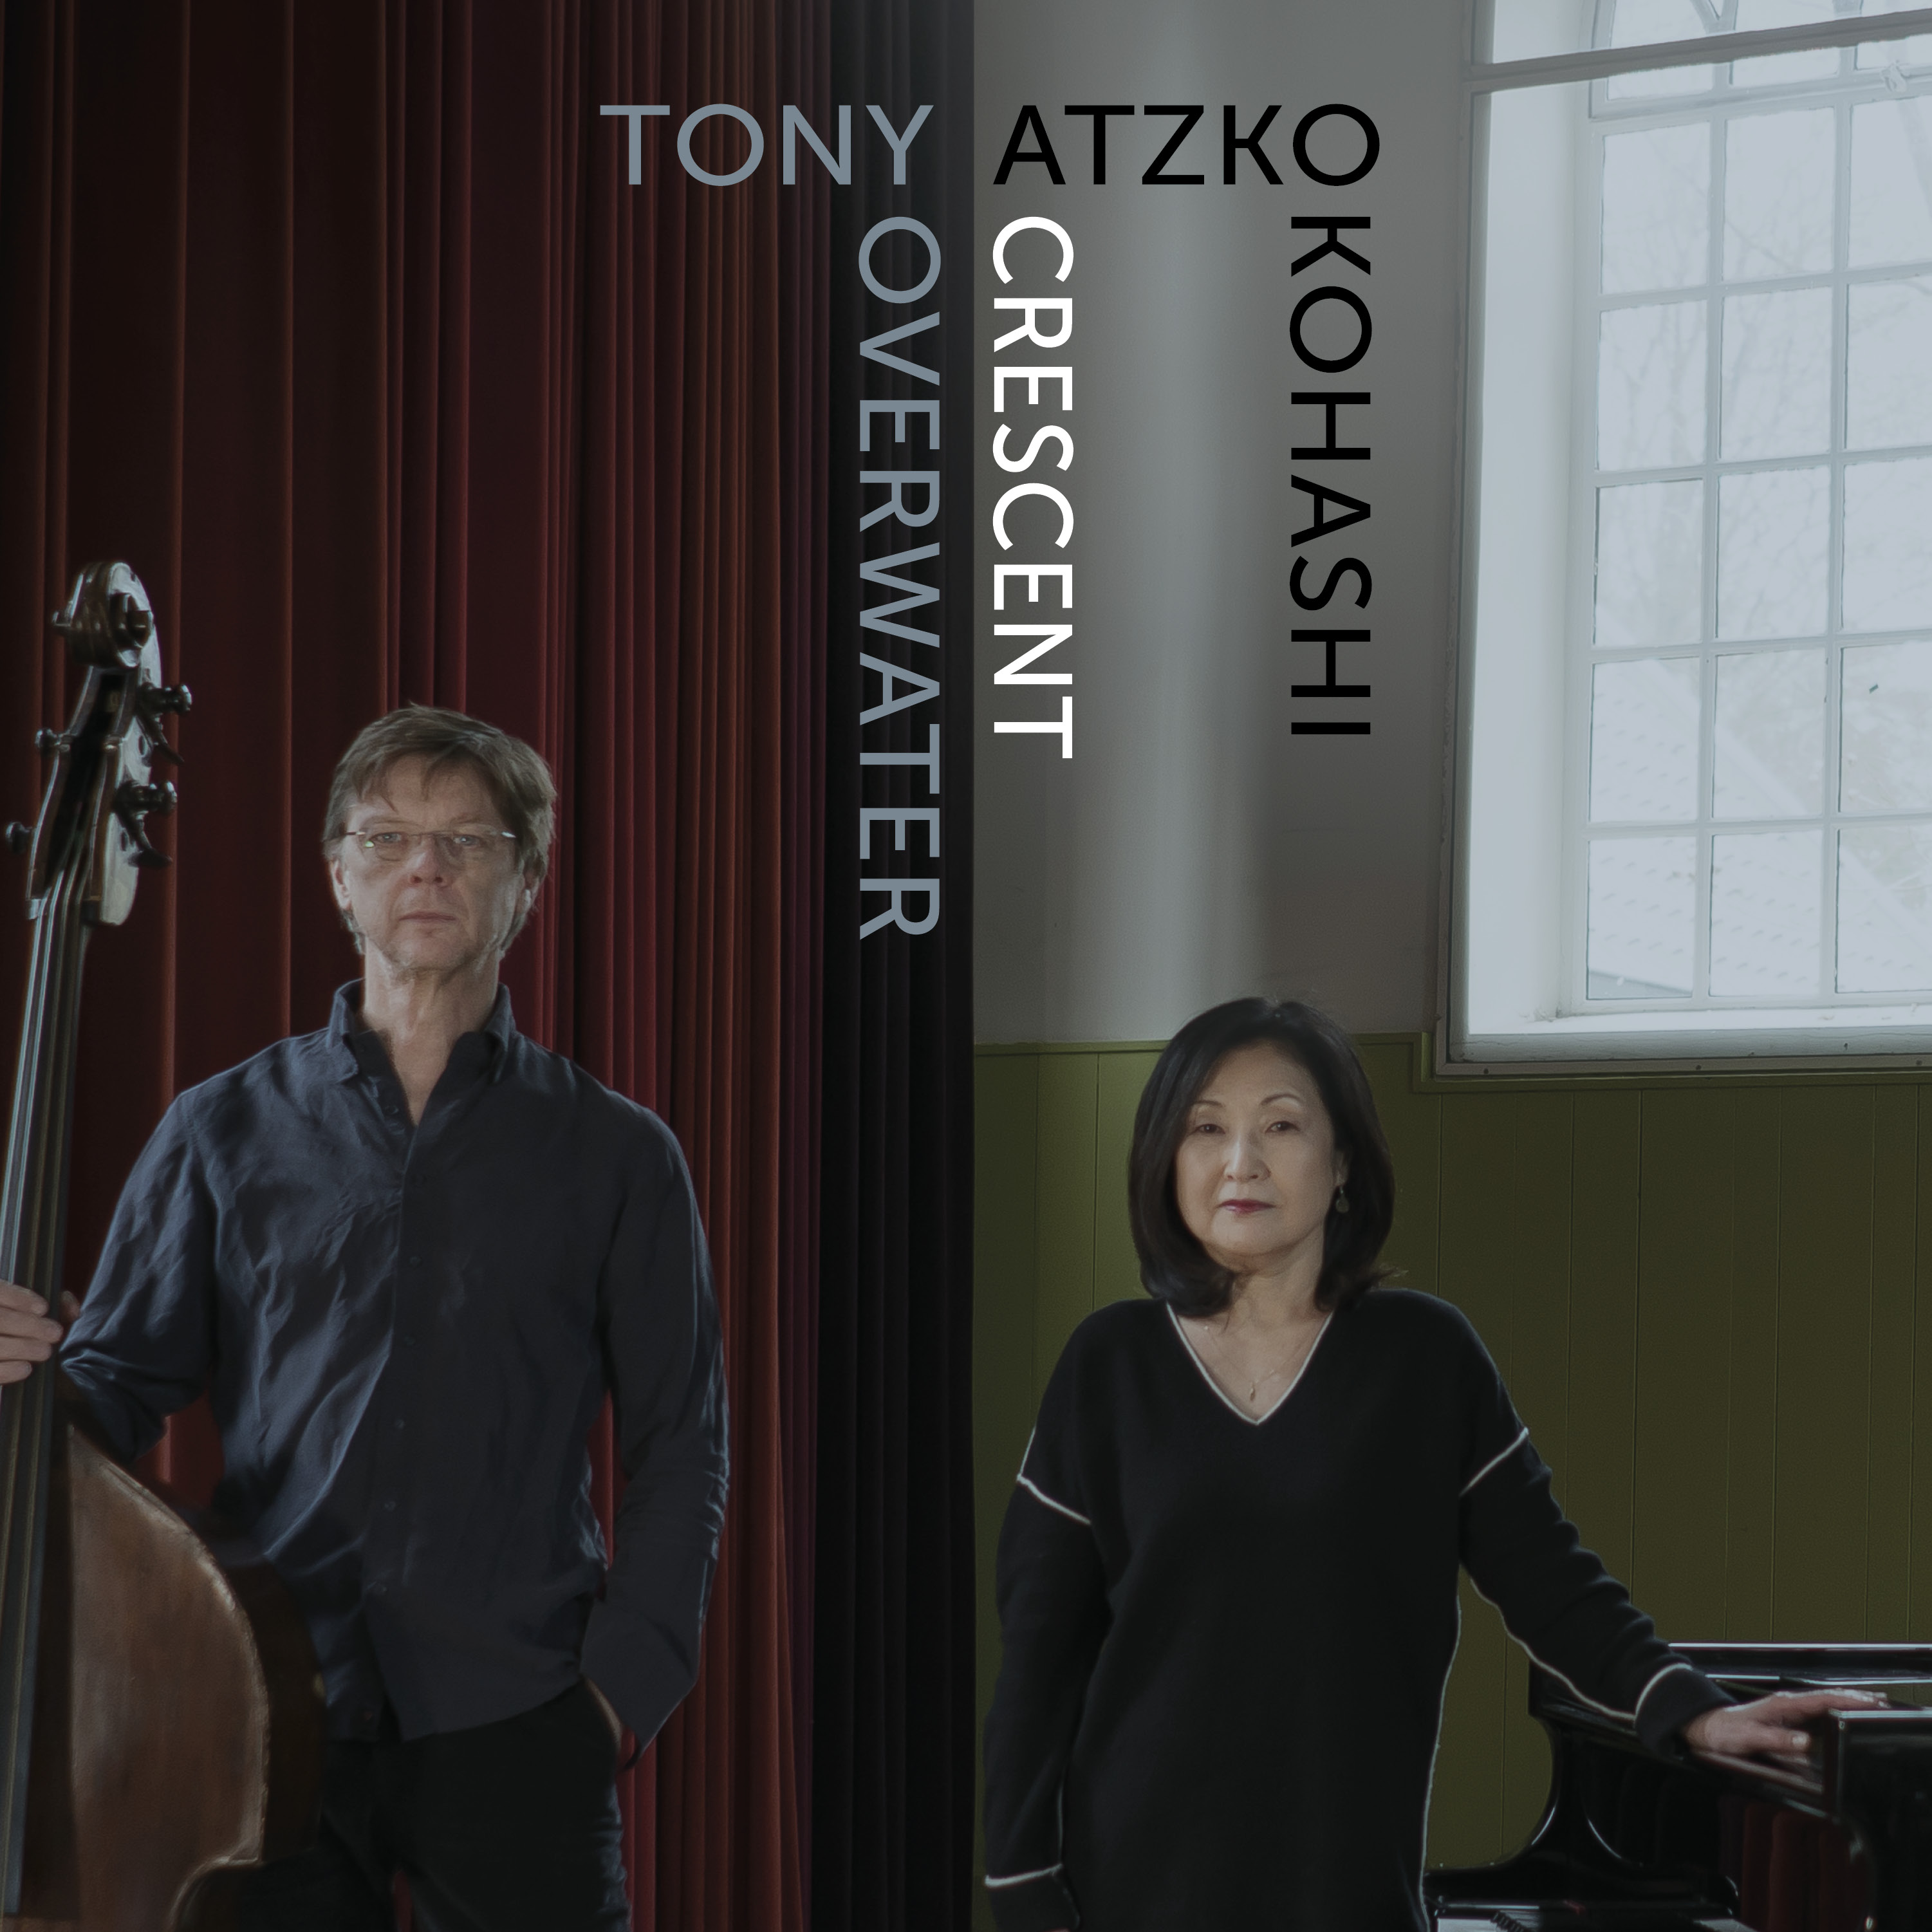 Atzko Kohashi & Tony Overwater  - Crescent